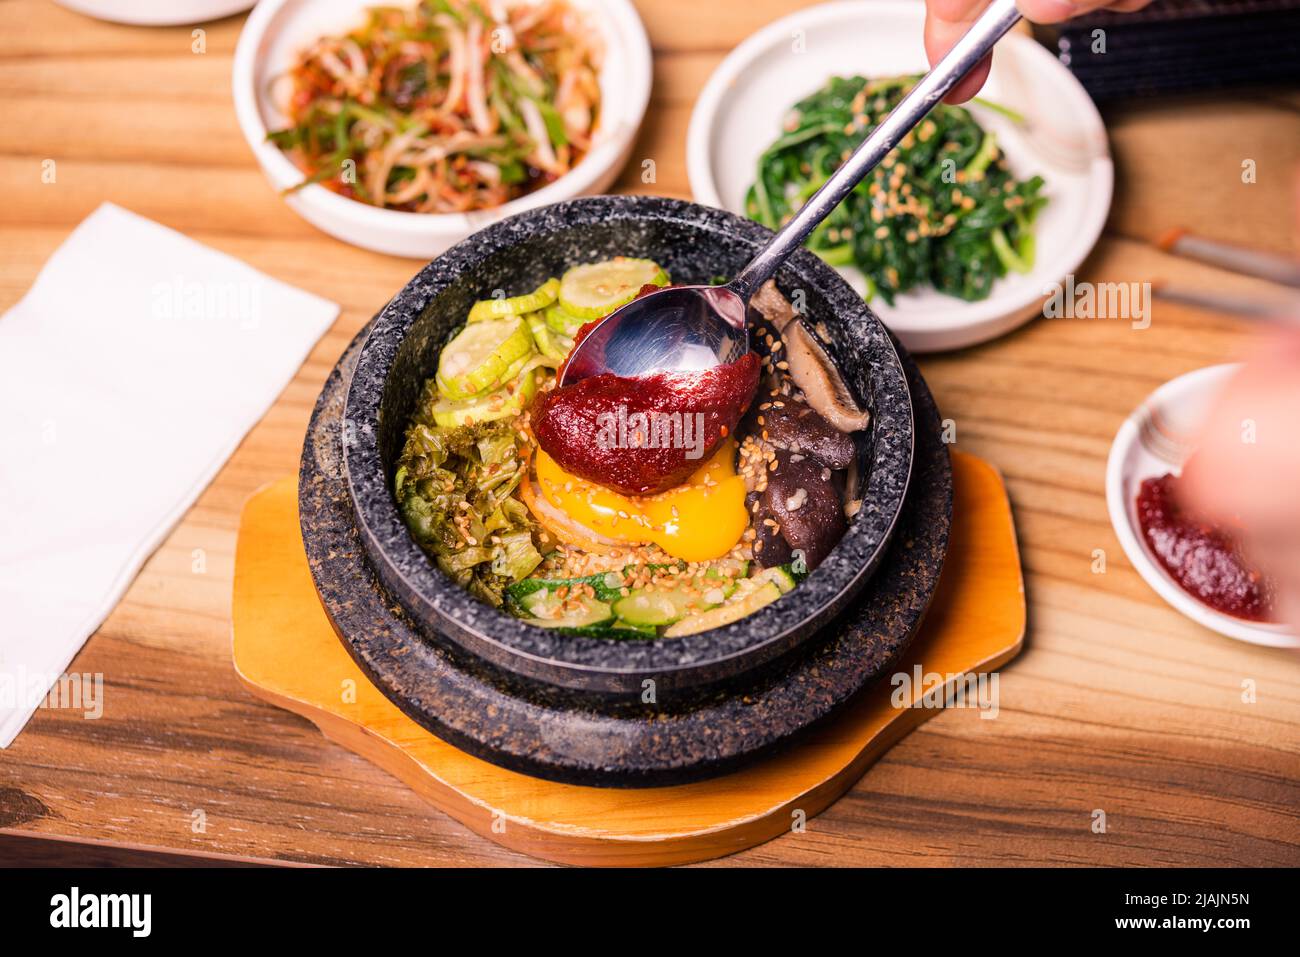 China Korean Stone Roast Pan Mix Rice Stone Bowl Processing